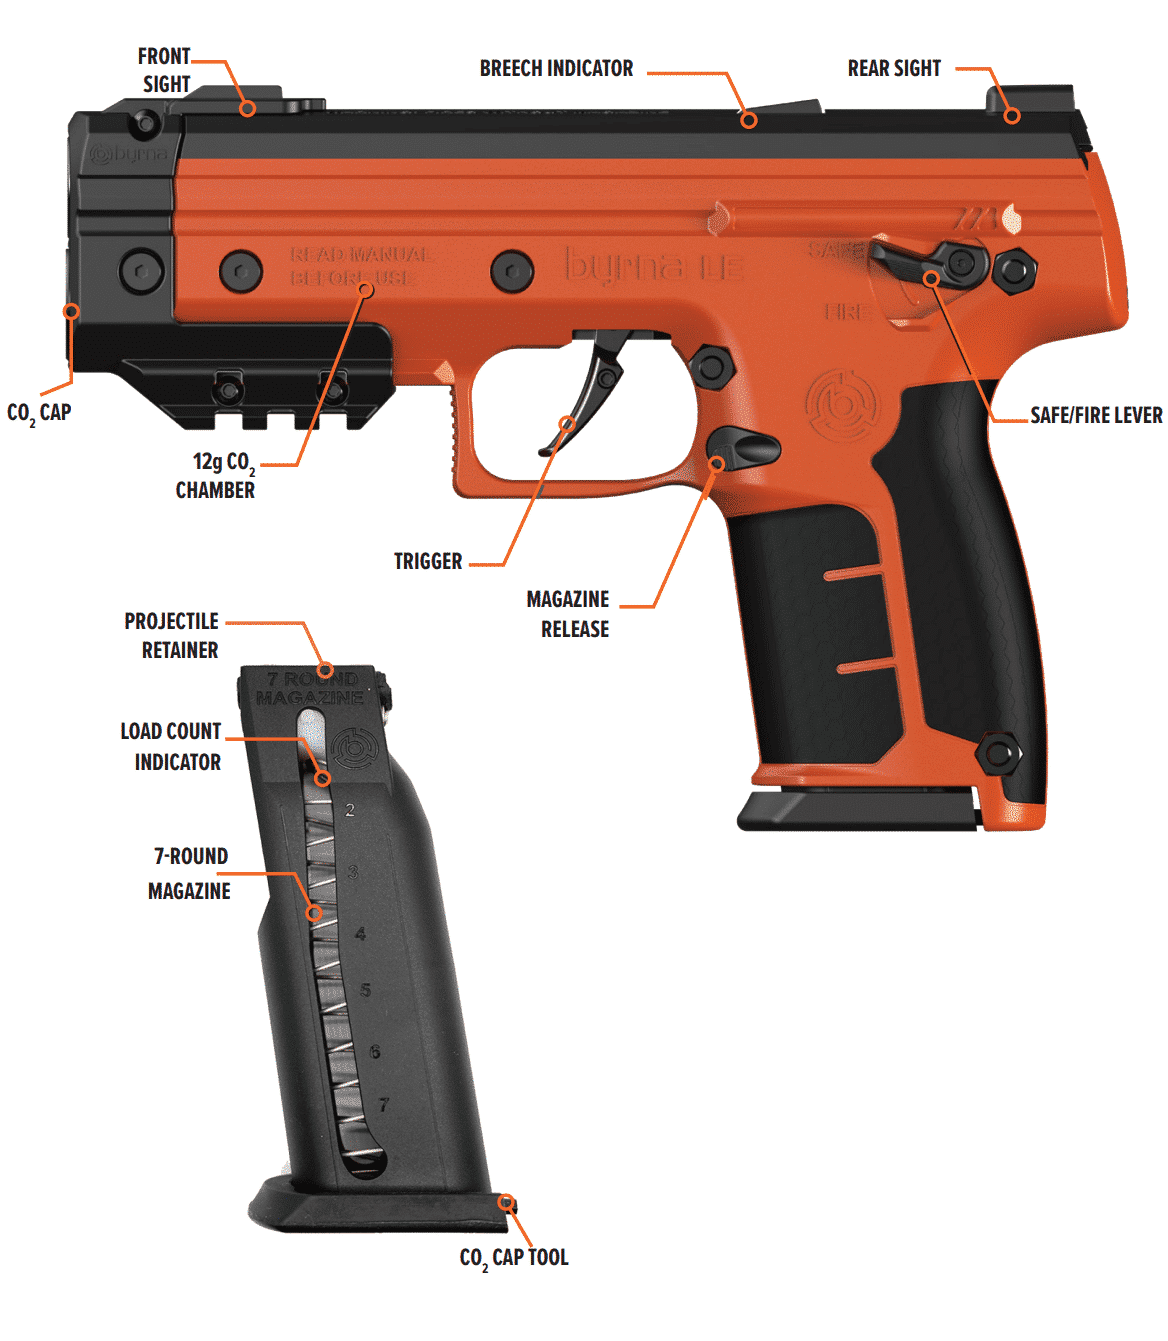 Byrna LE Pepper Gun Overview